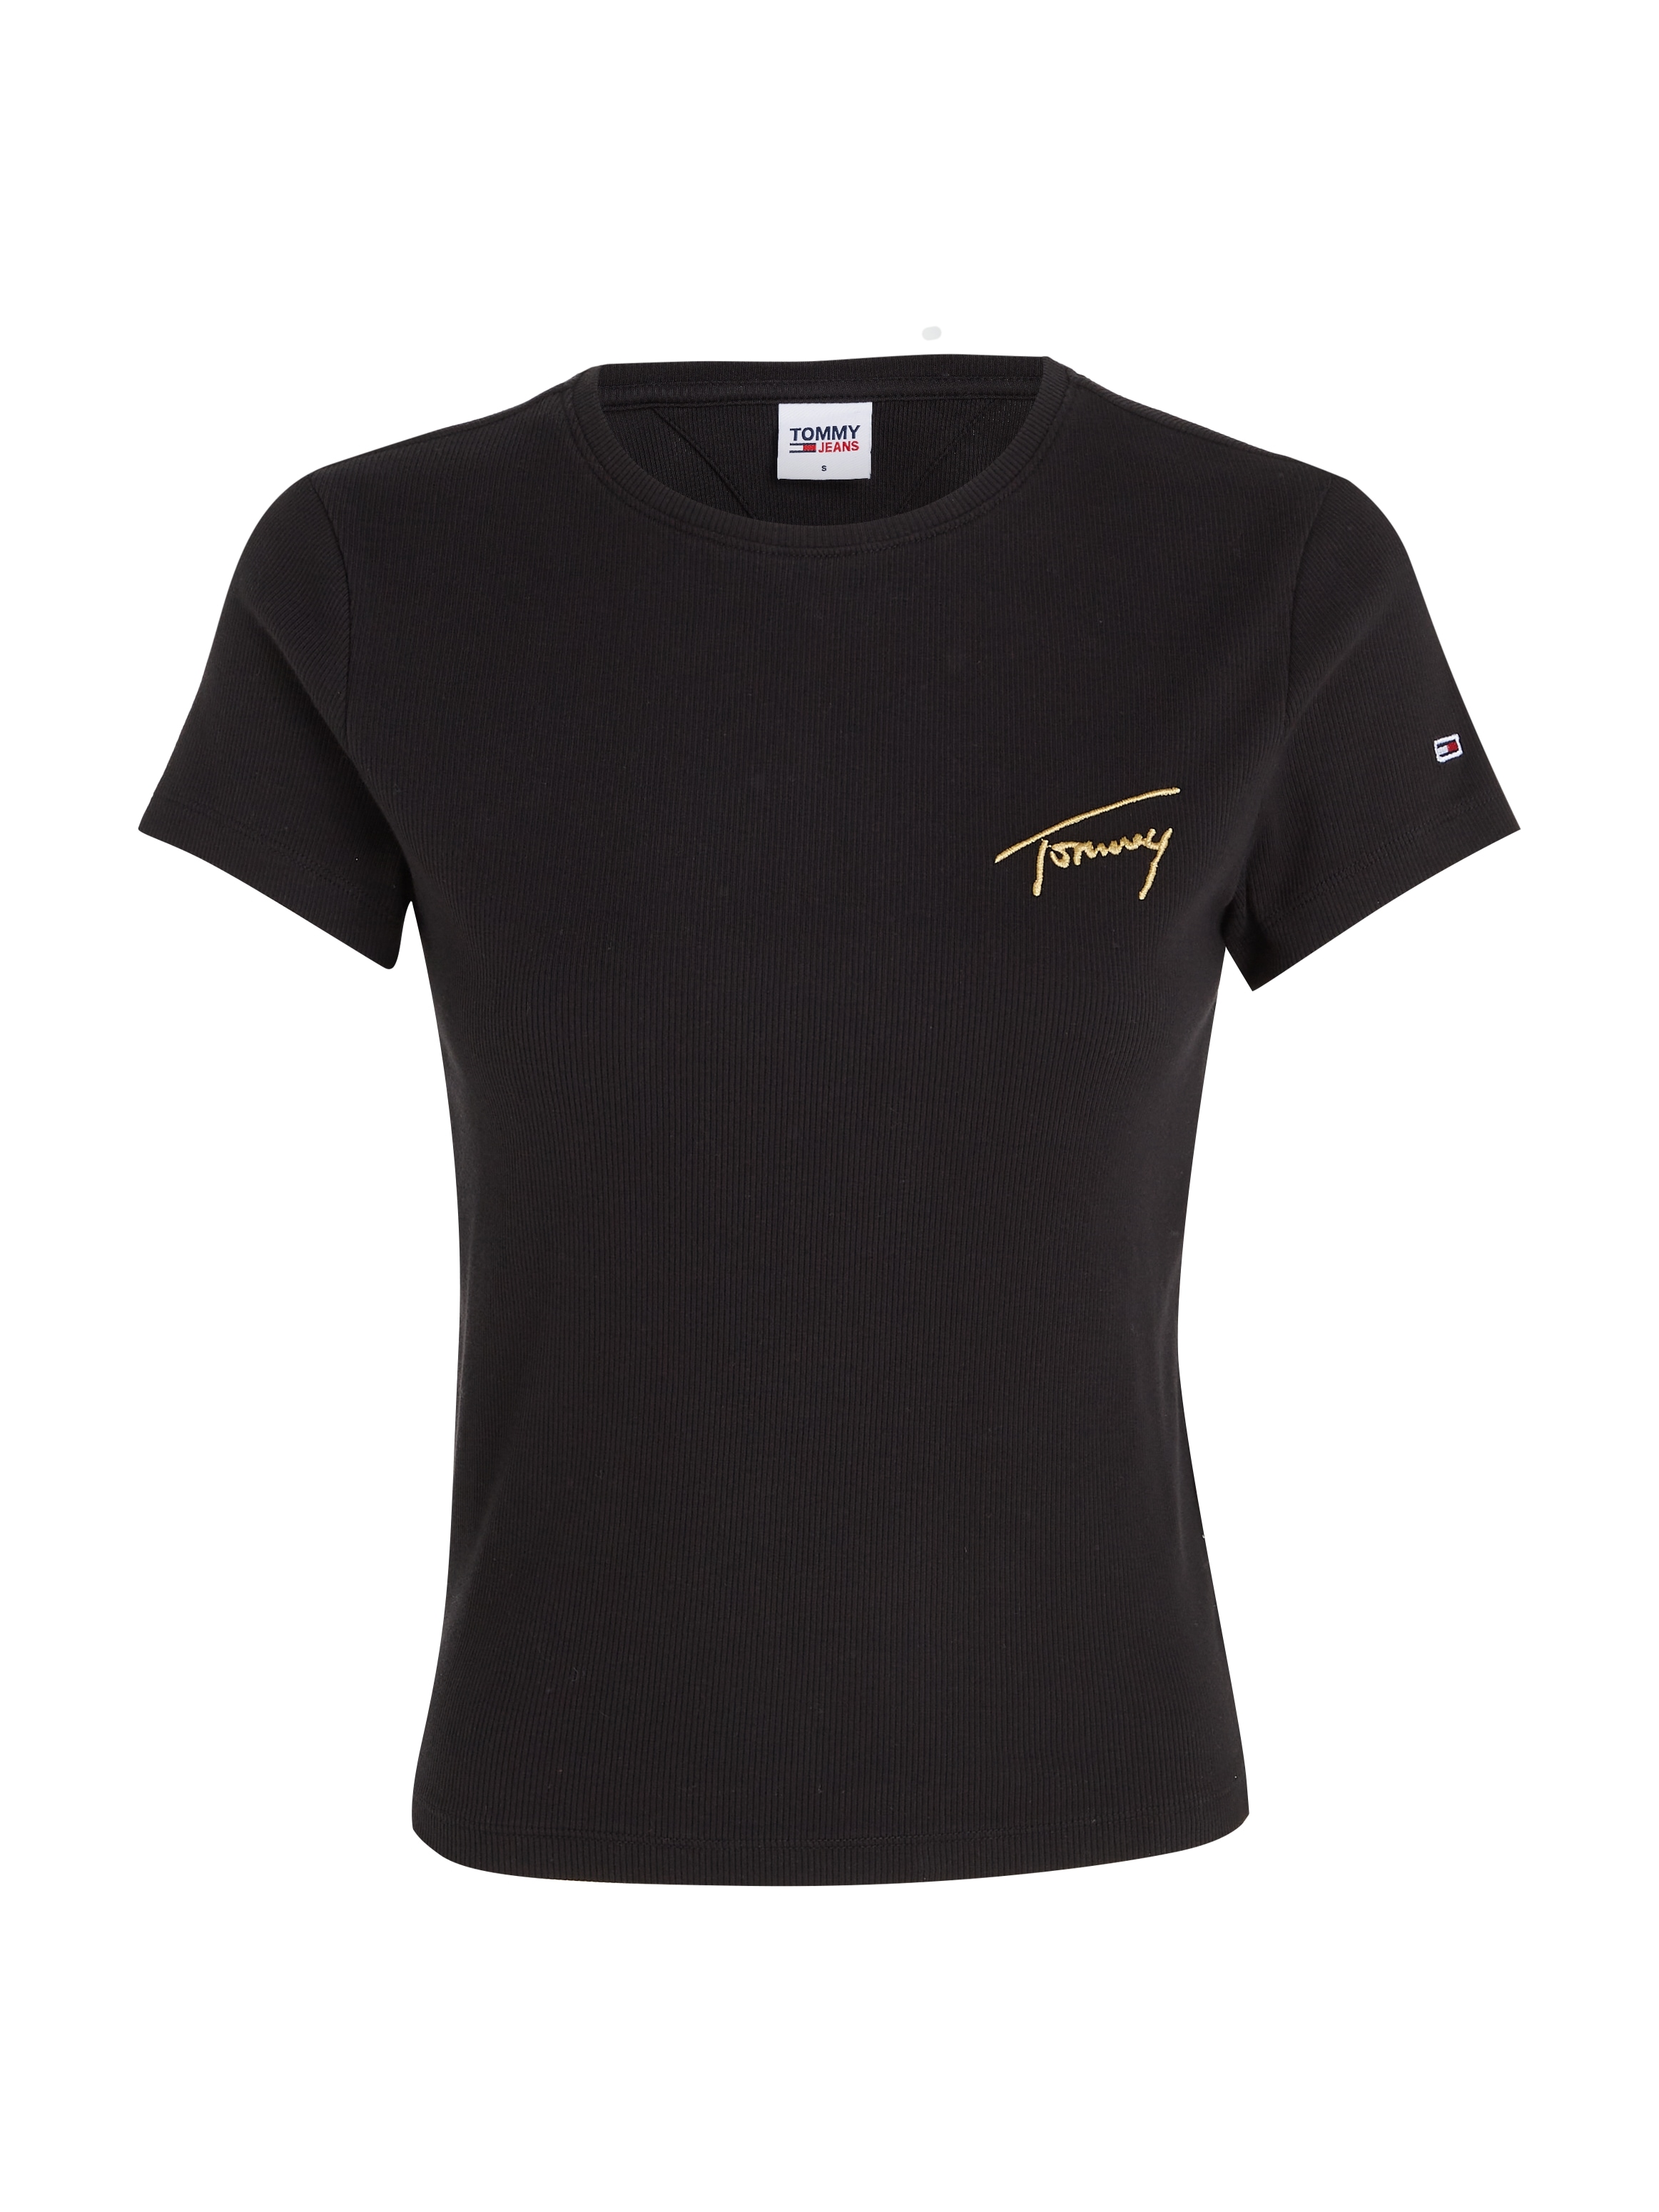 mit walking SIGNATURE Tommy Signature GOLD SS«, TEE goldfarbenen Logo-Schriftzug »TJW I\'m online kaufen | T-Shirt Jeans BBY